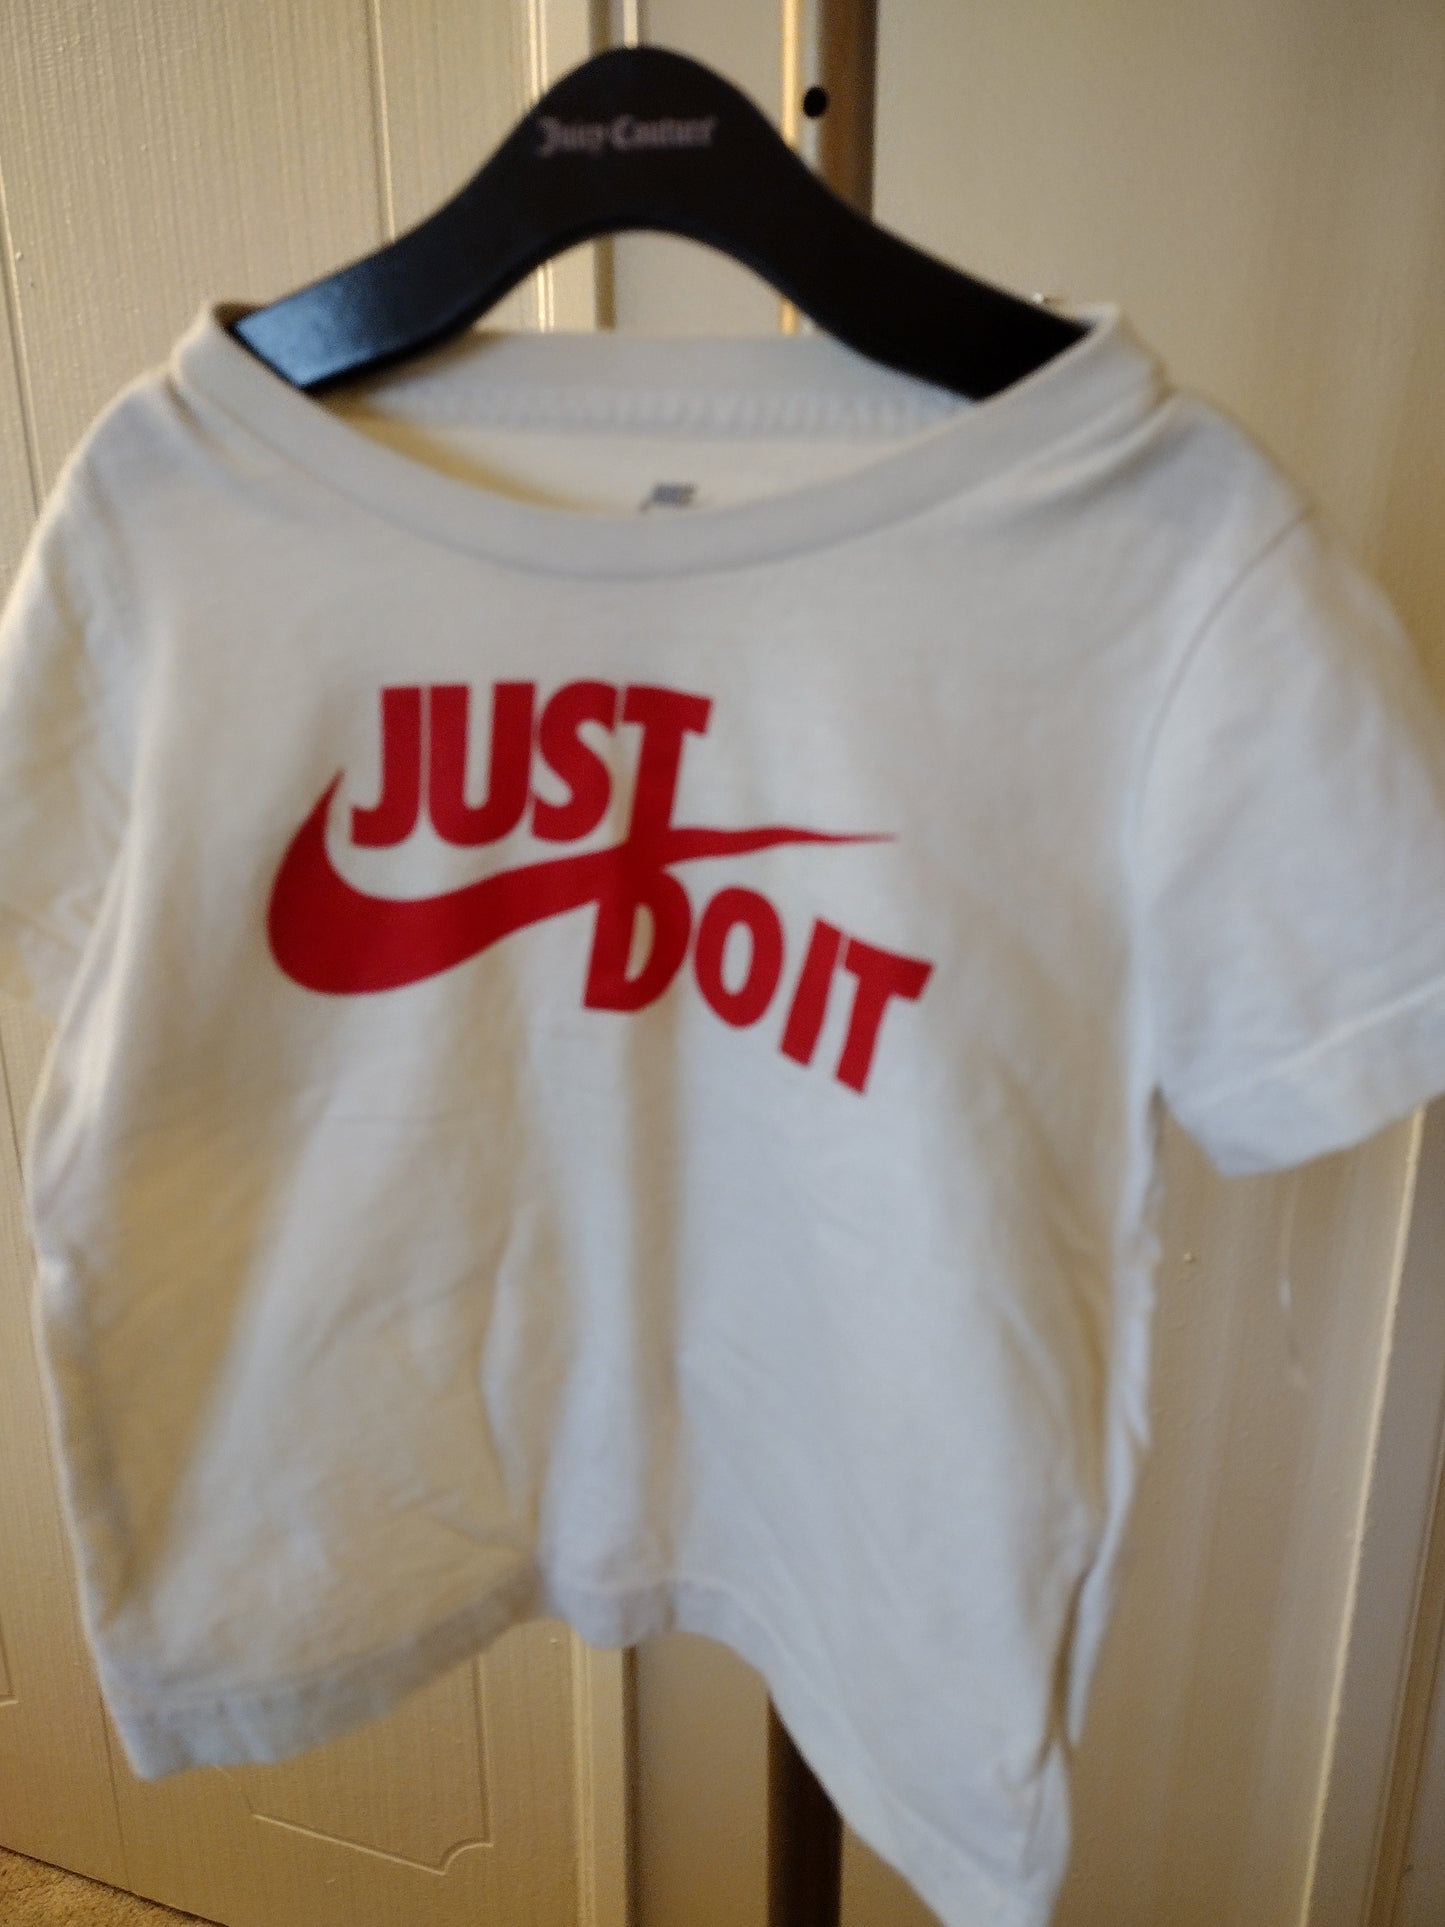 Nike Little Kids "Just Do It" T-Shirt Boys